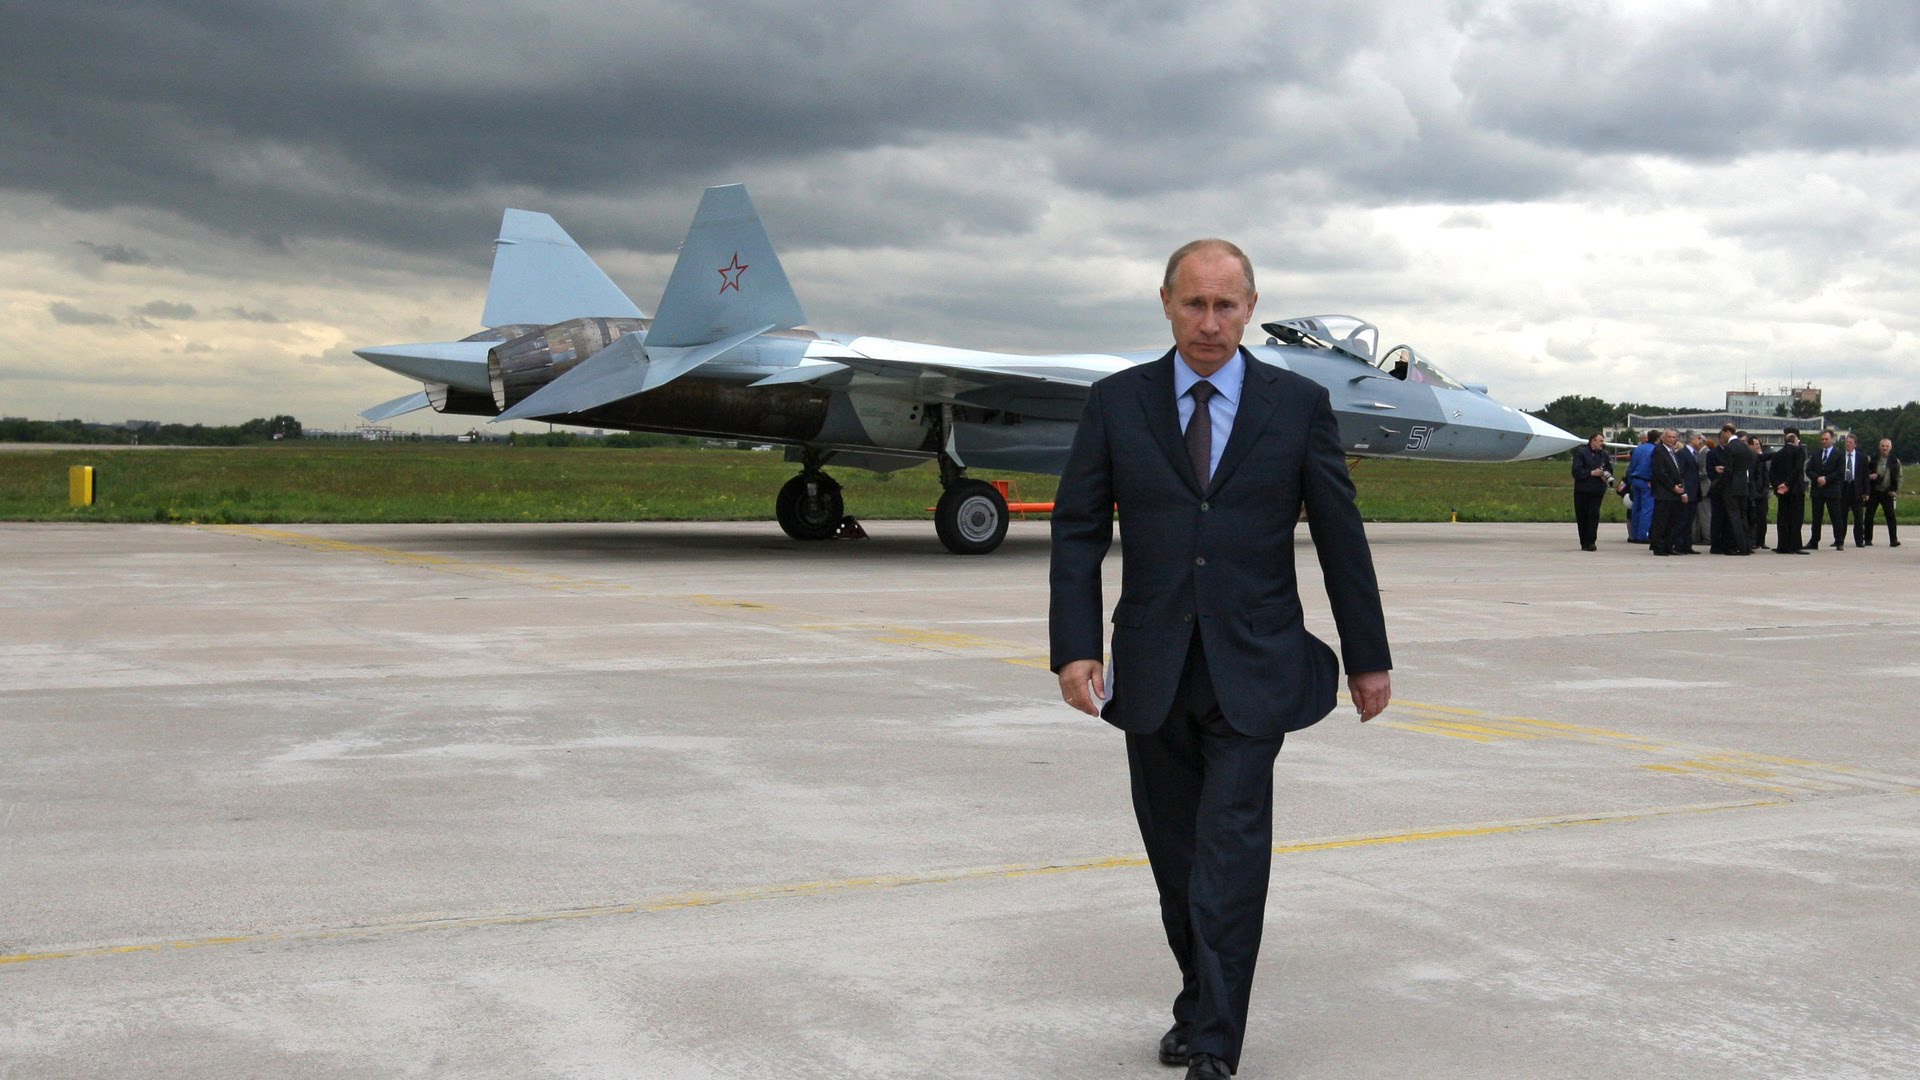 Putin arrives in Yerevan to take part in post-Soviet military bloc summit